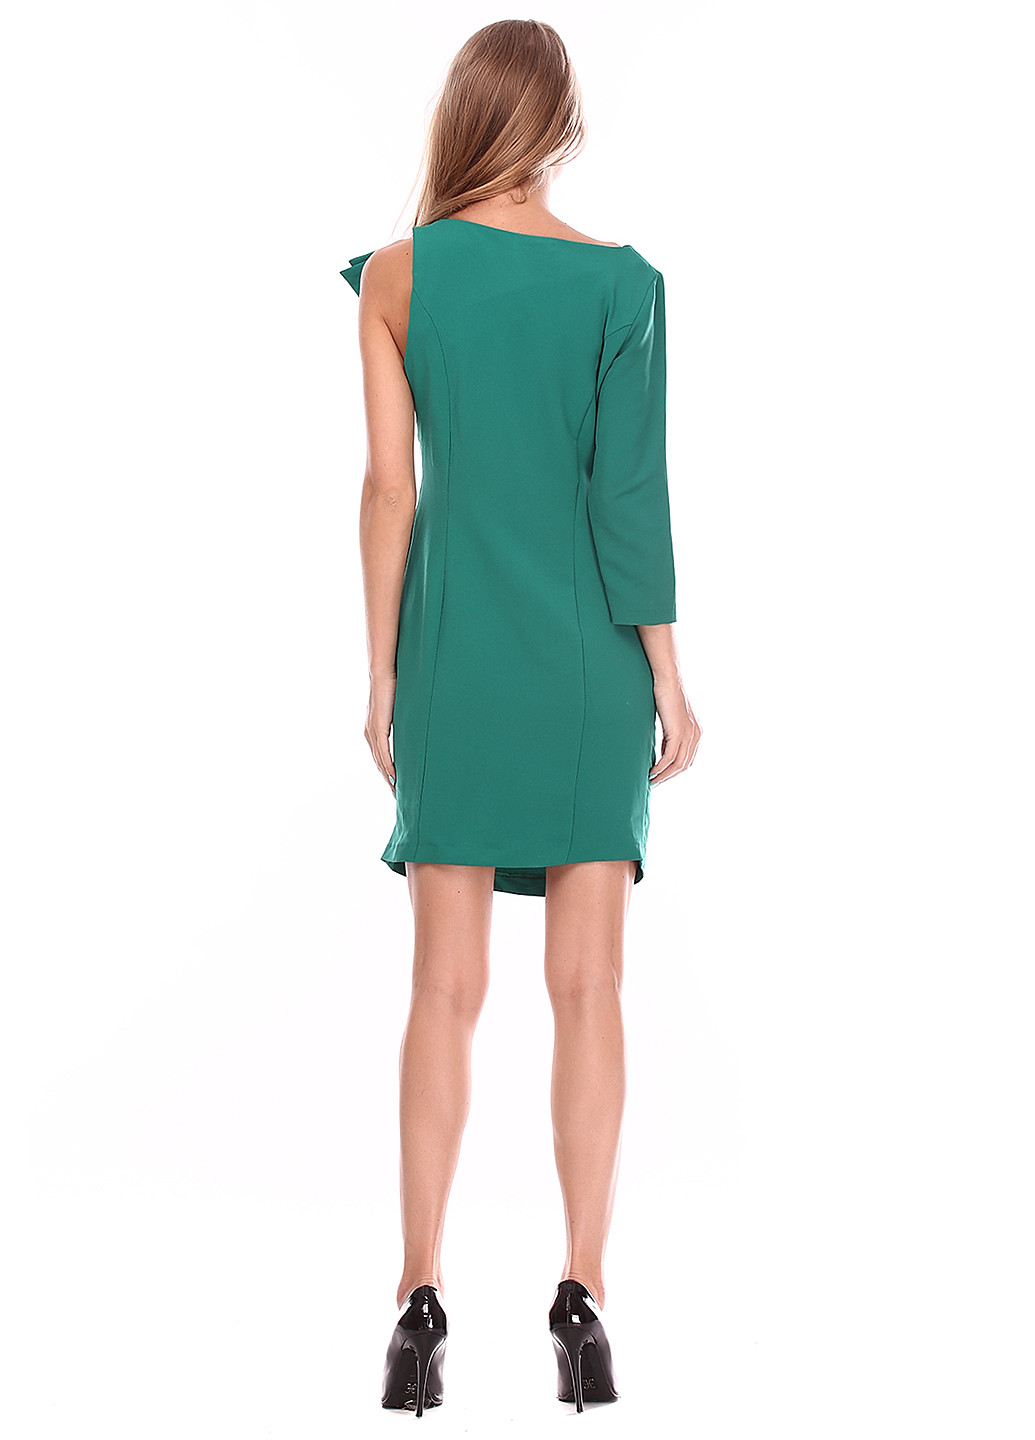 Зеленое кэжуал платье футляр AKE однотонное